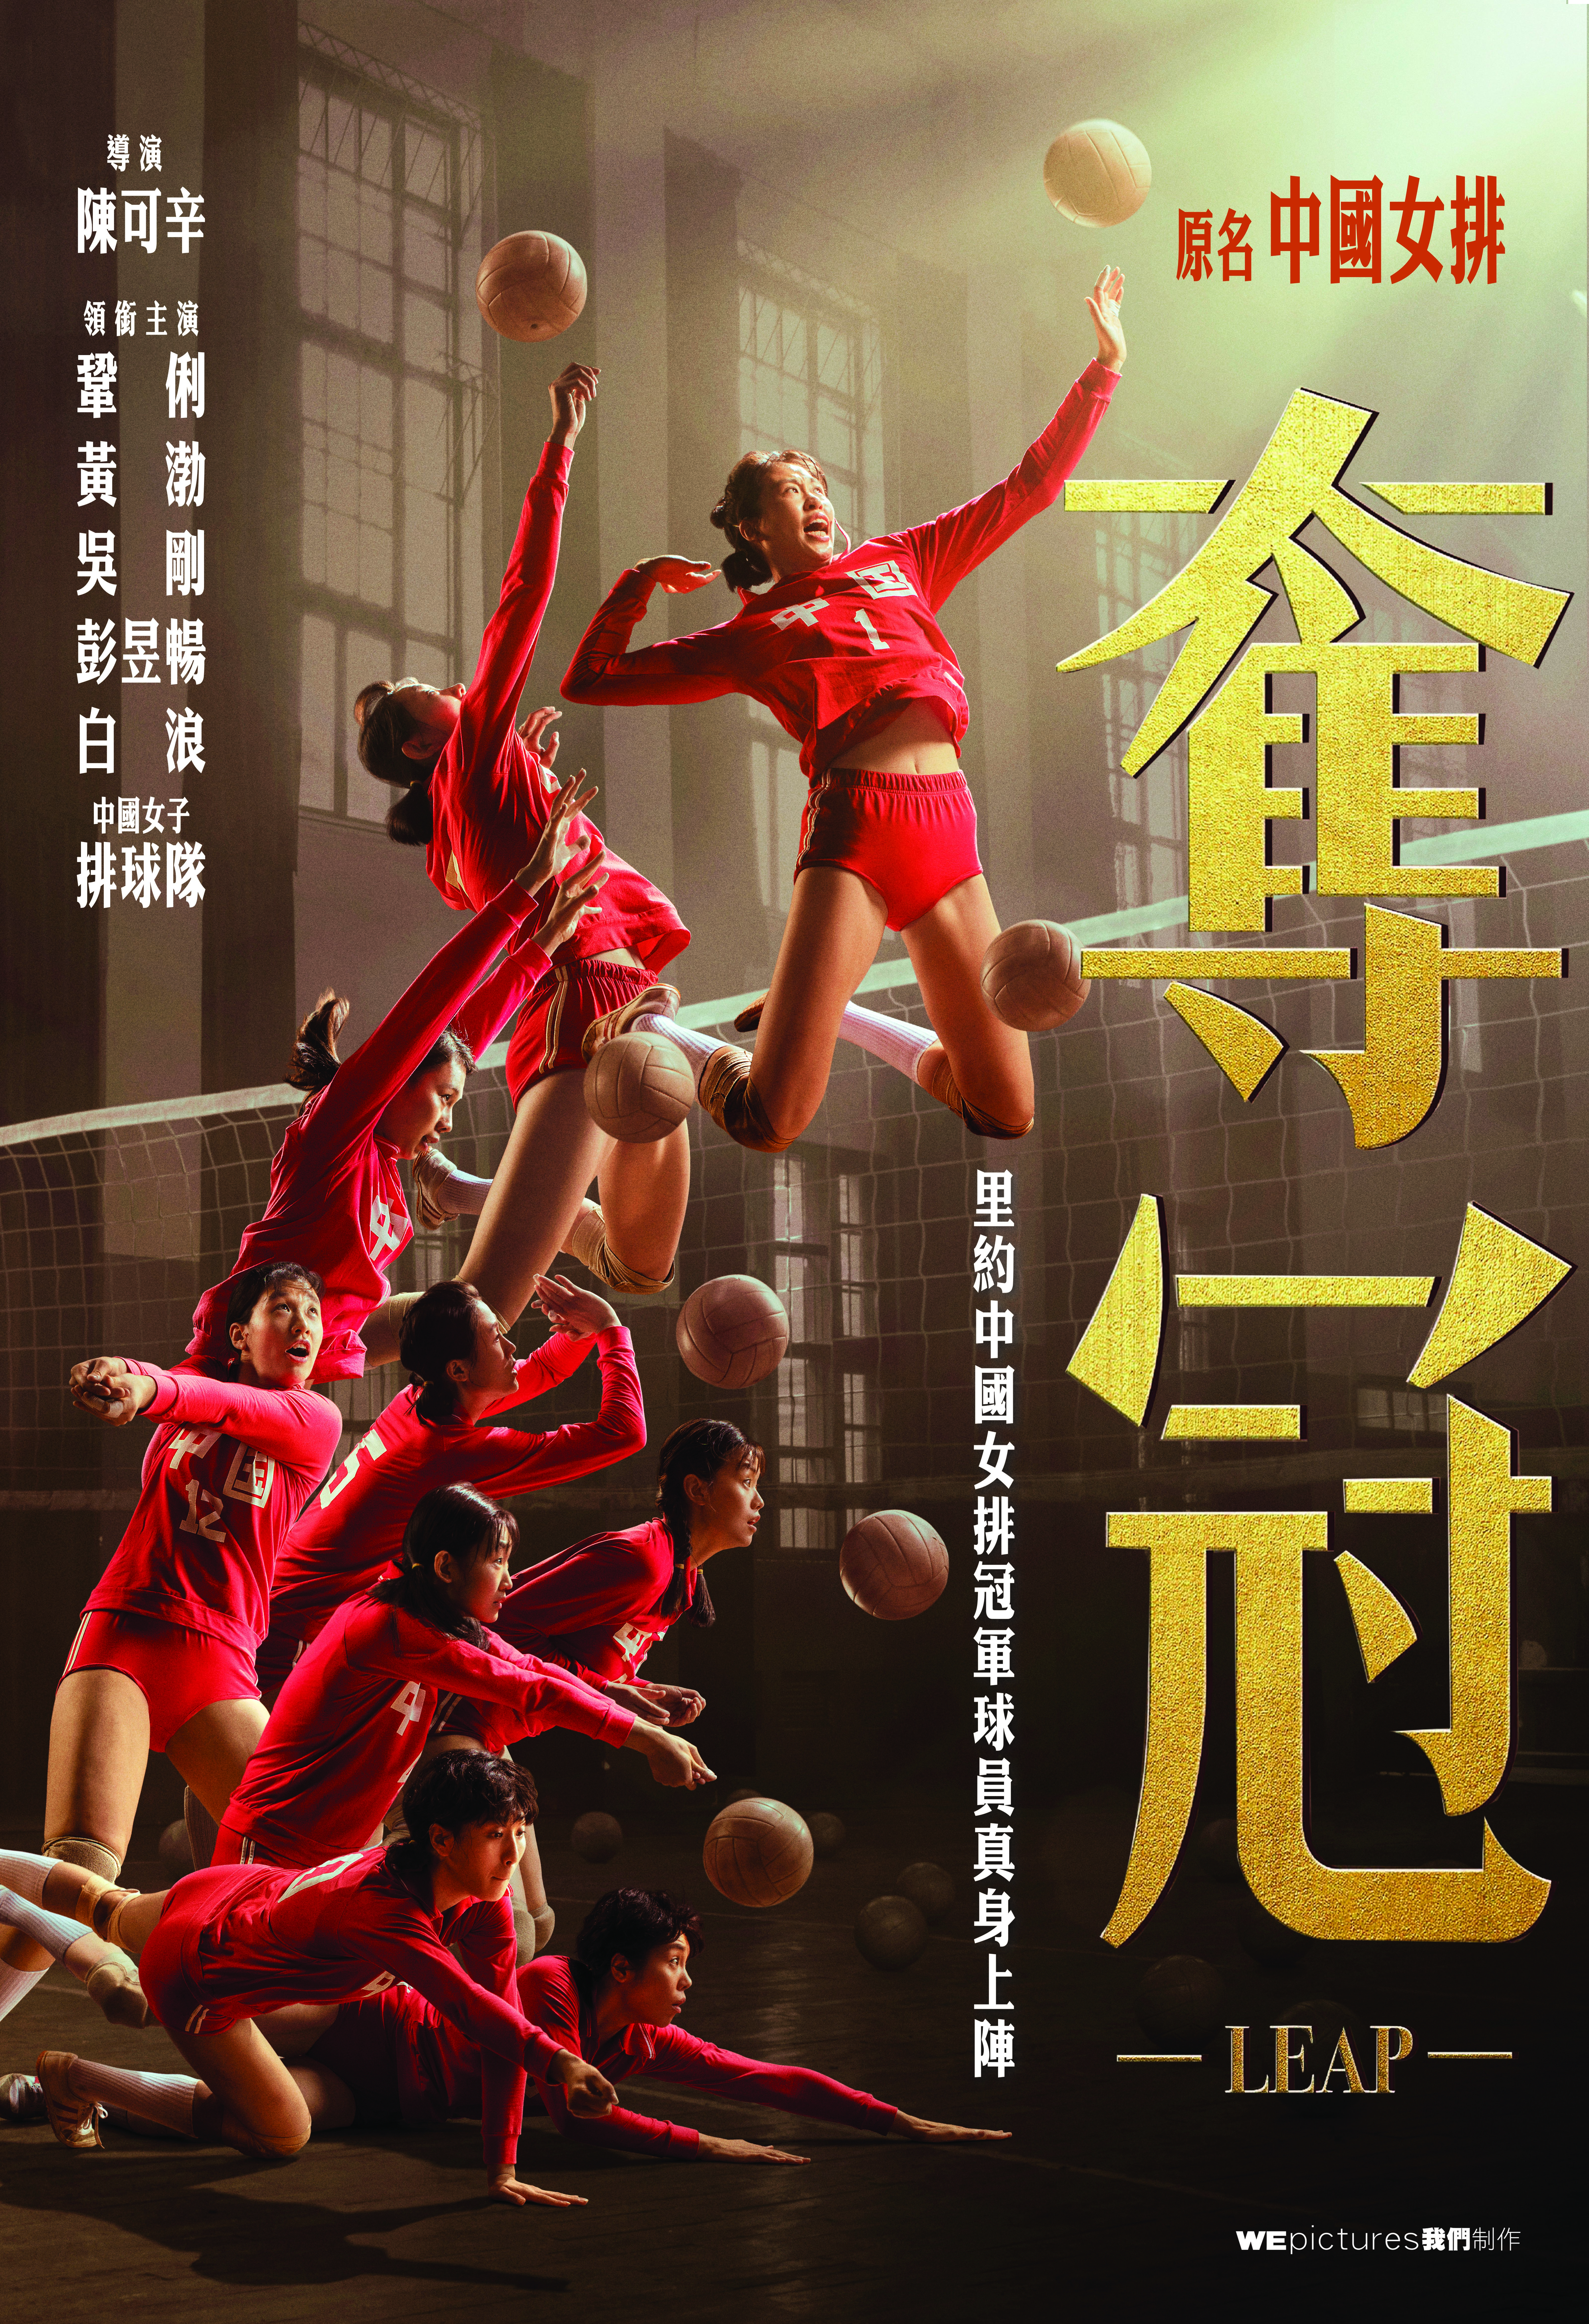 Leap (2020) Main Poster